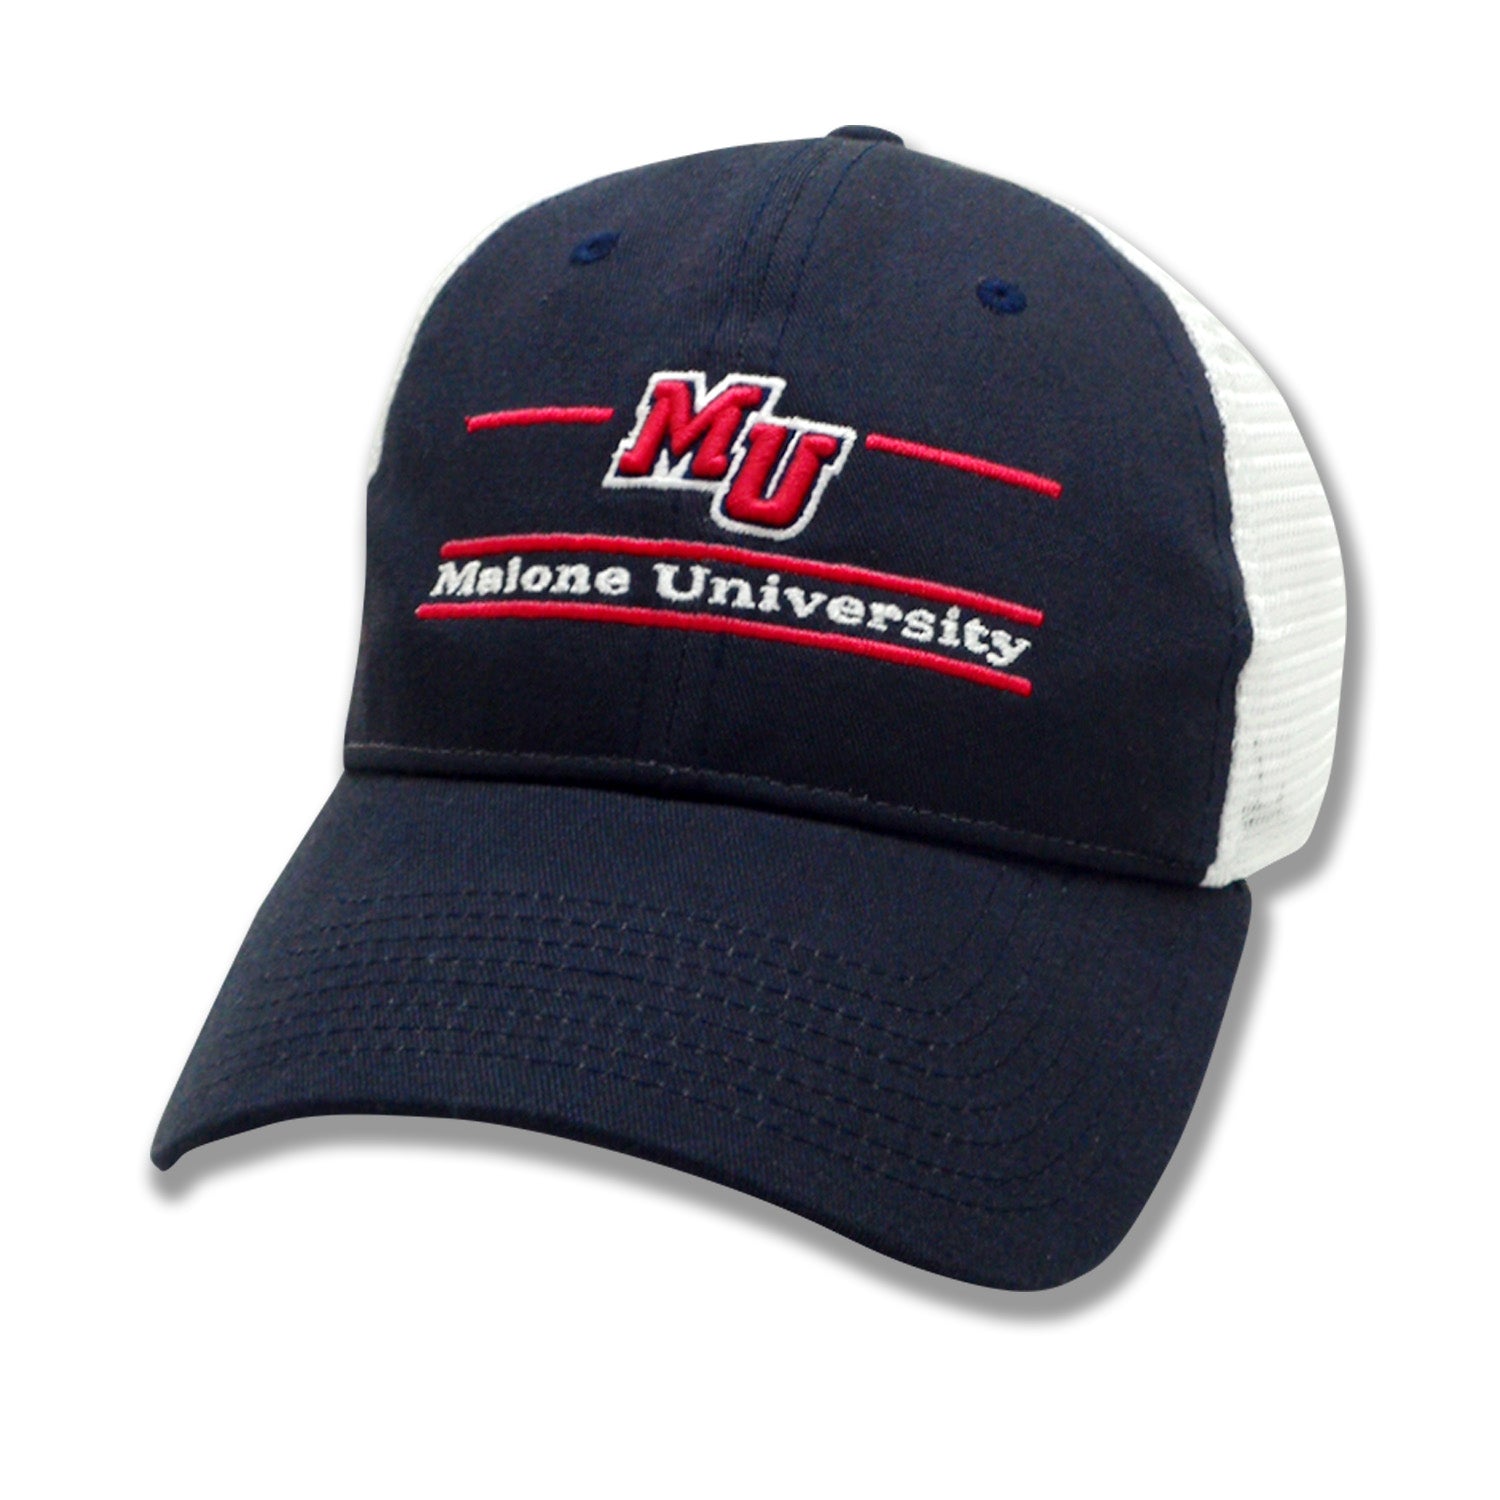 Campus Malone Campus Hat, MU Trucker Store - Store Washed – Navy The MU Game